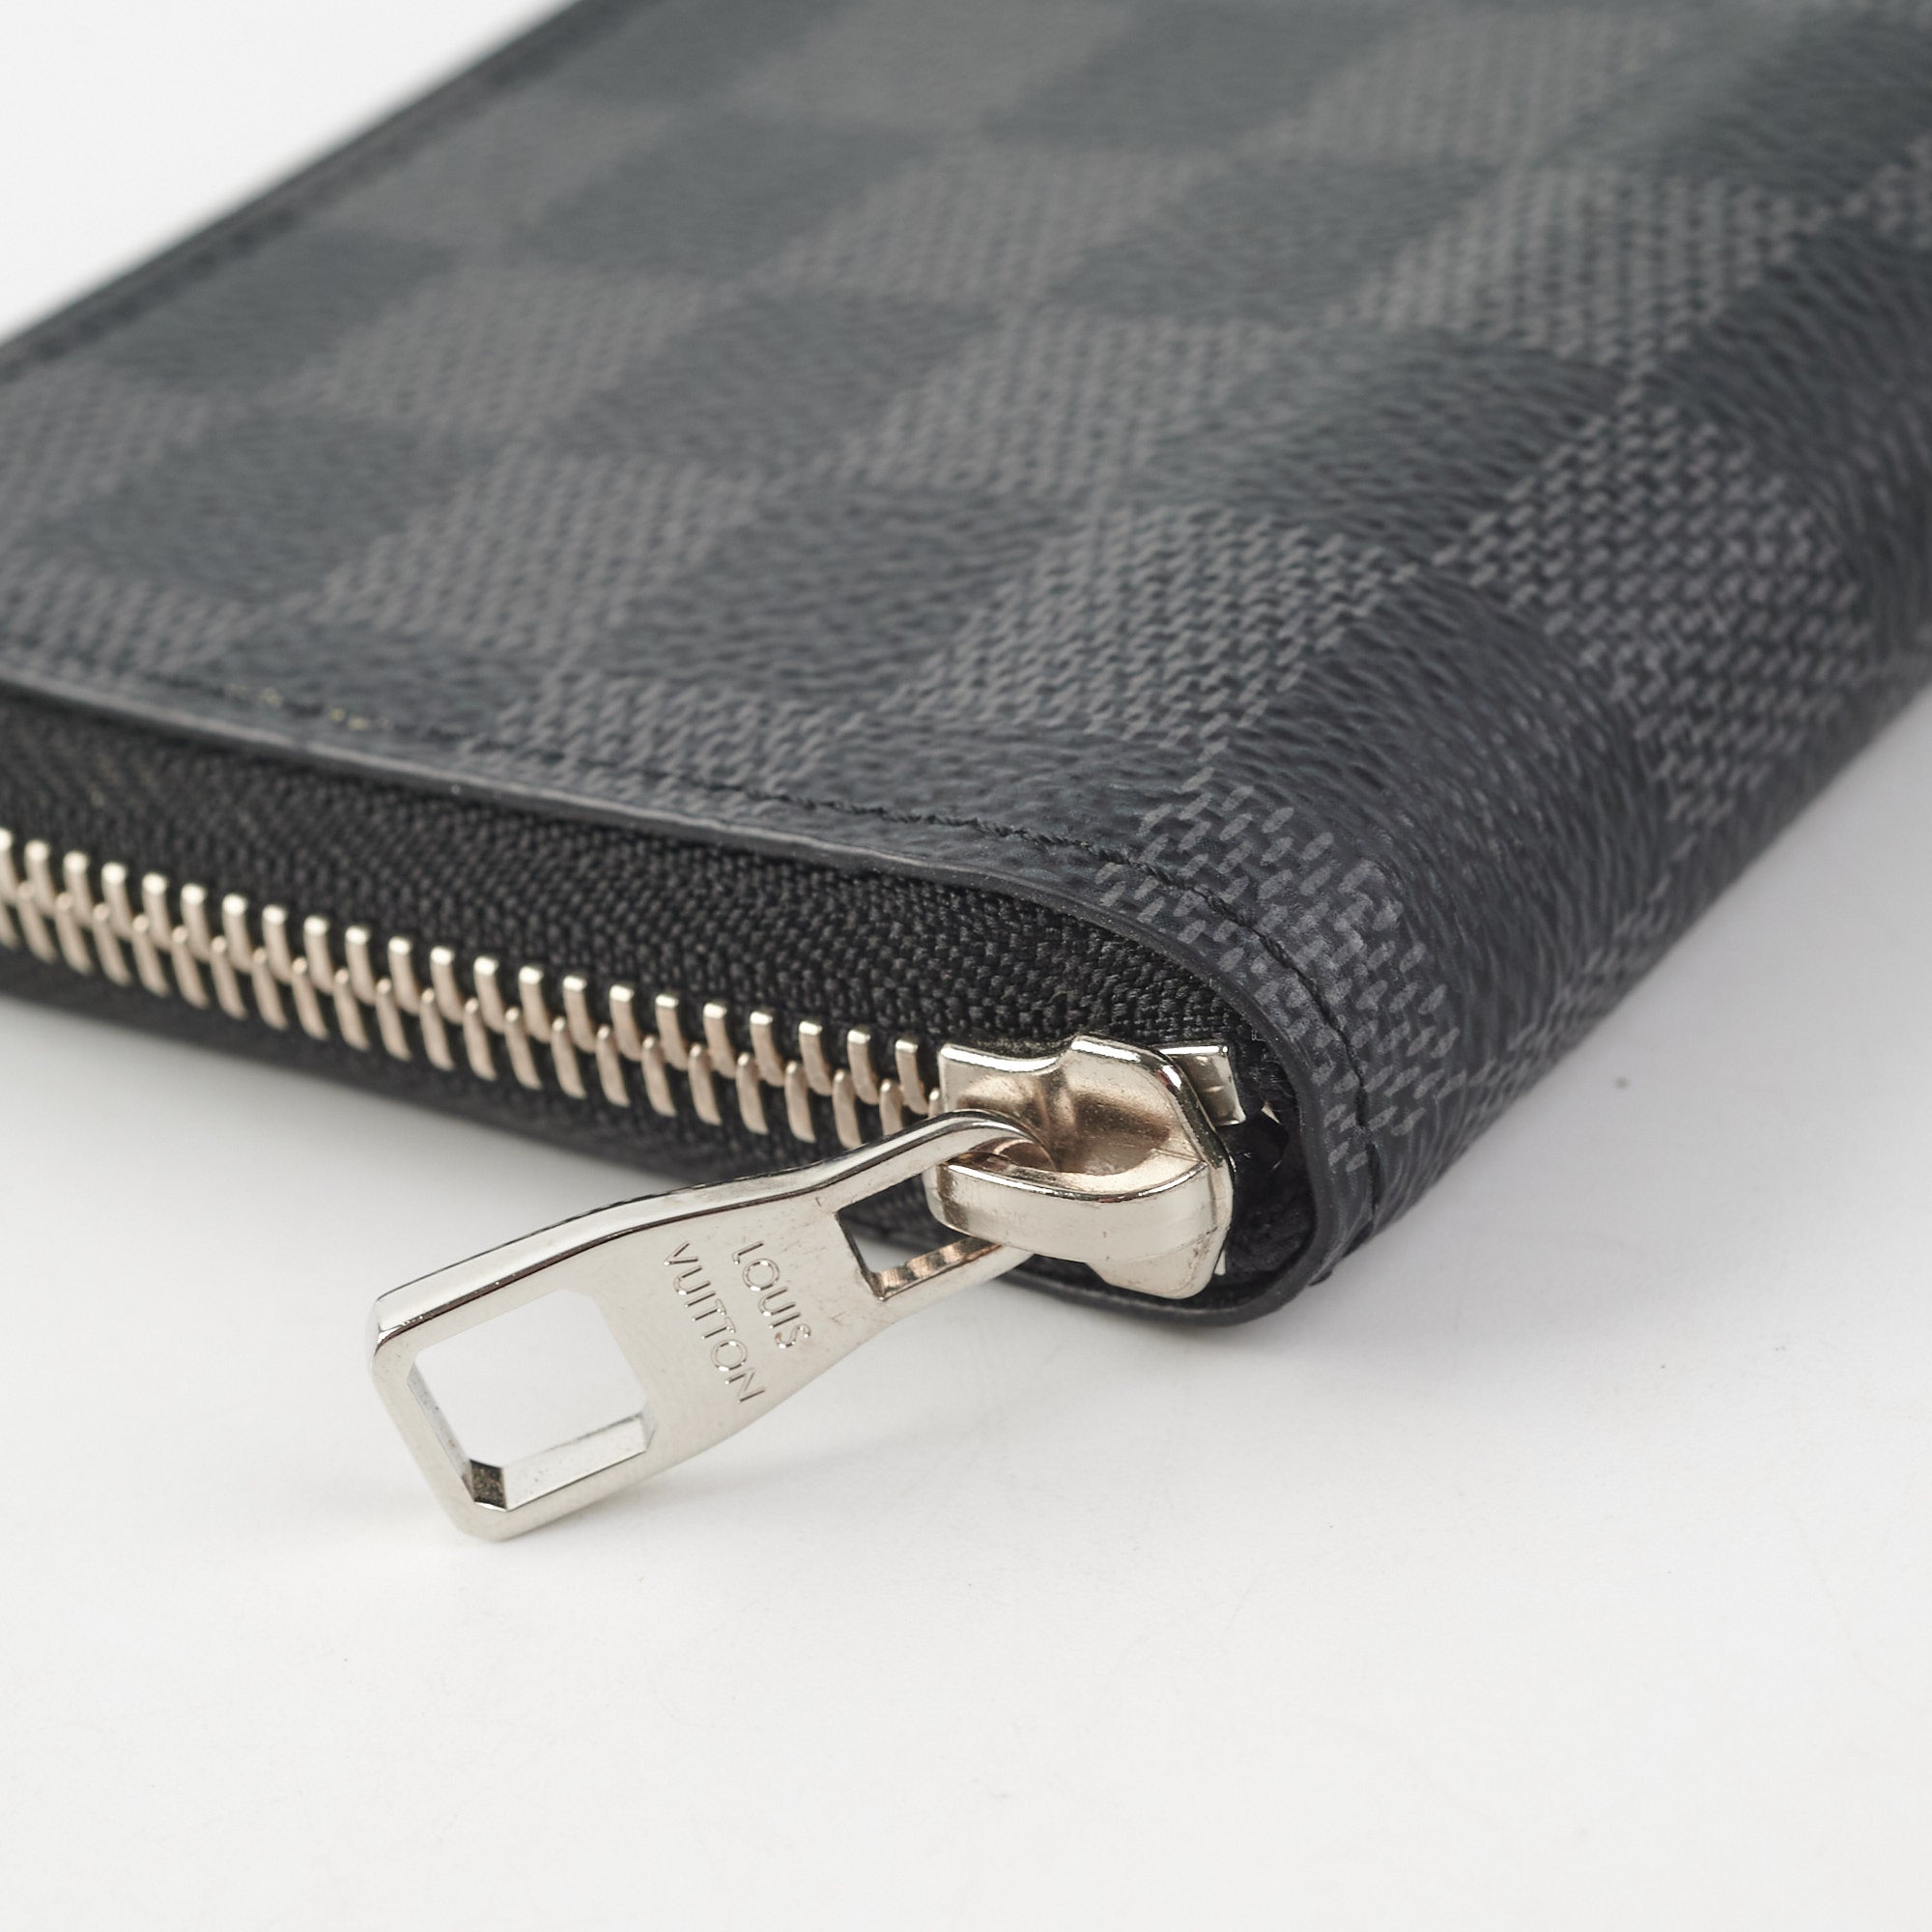 Super Rank Latest Louis Vuitton Zip Wallet Damier Graphite Genuine Product